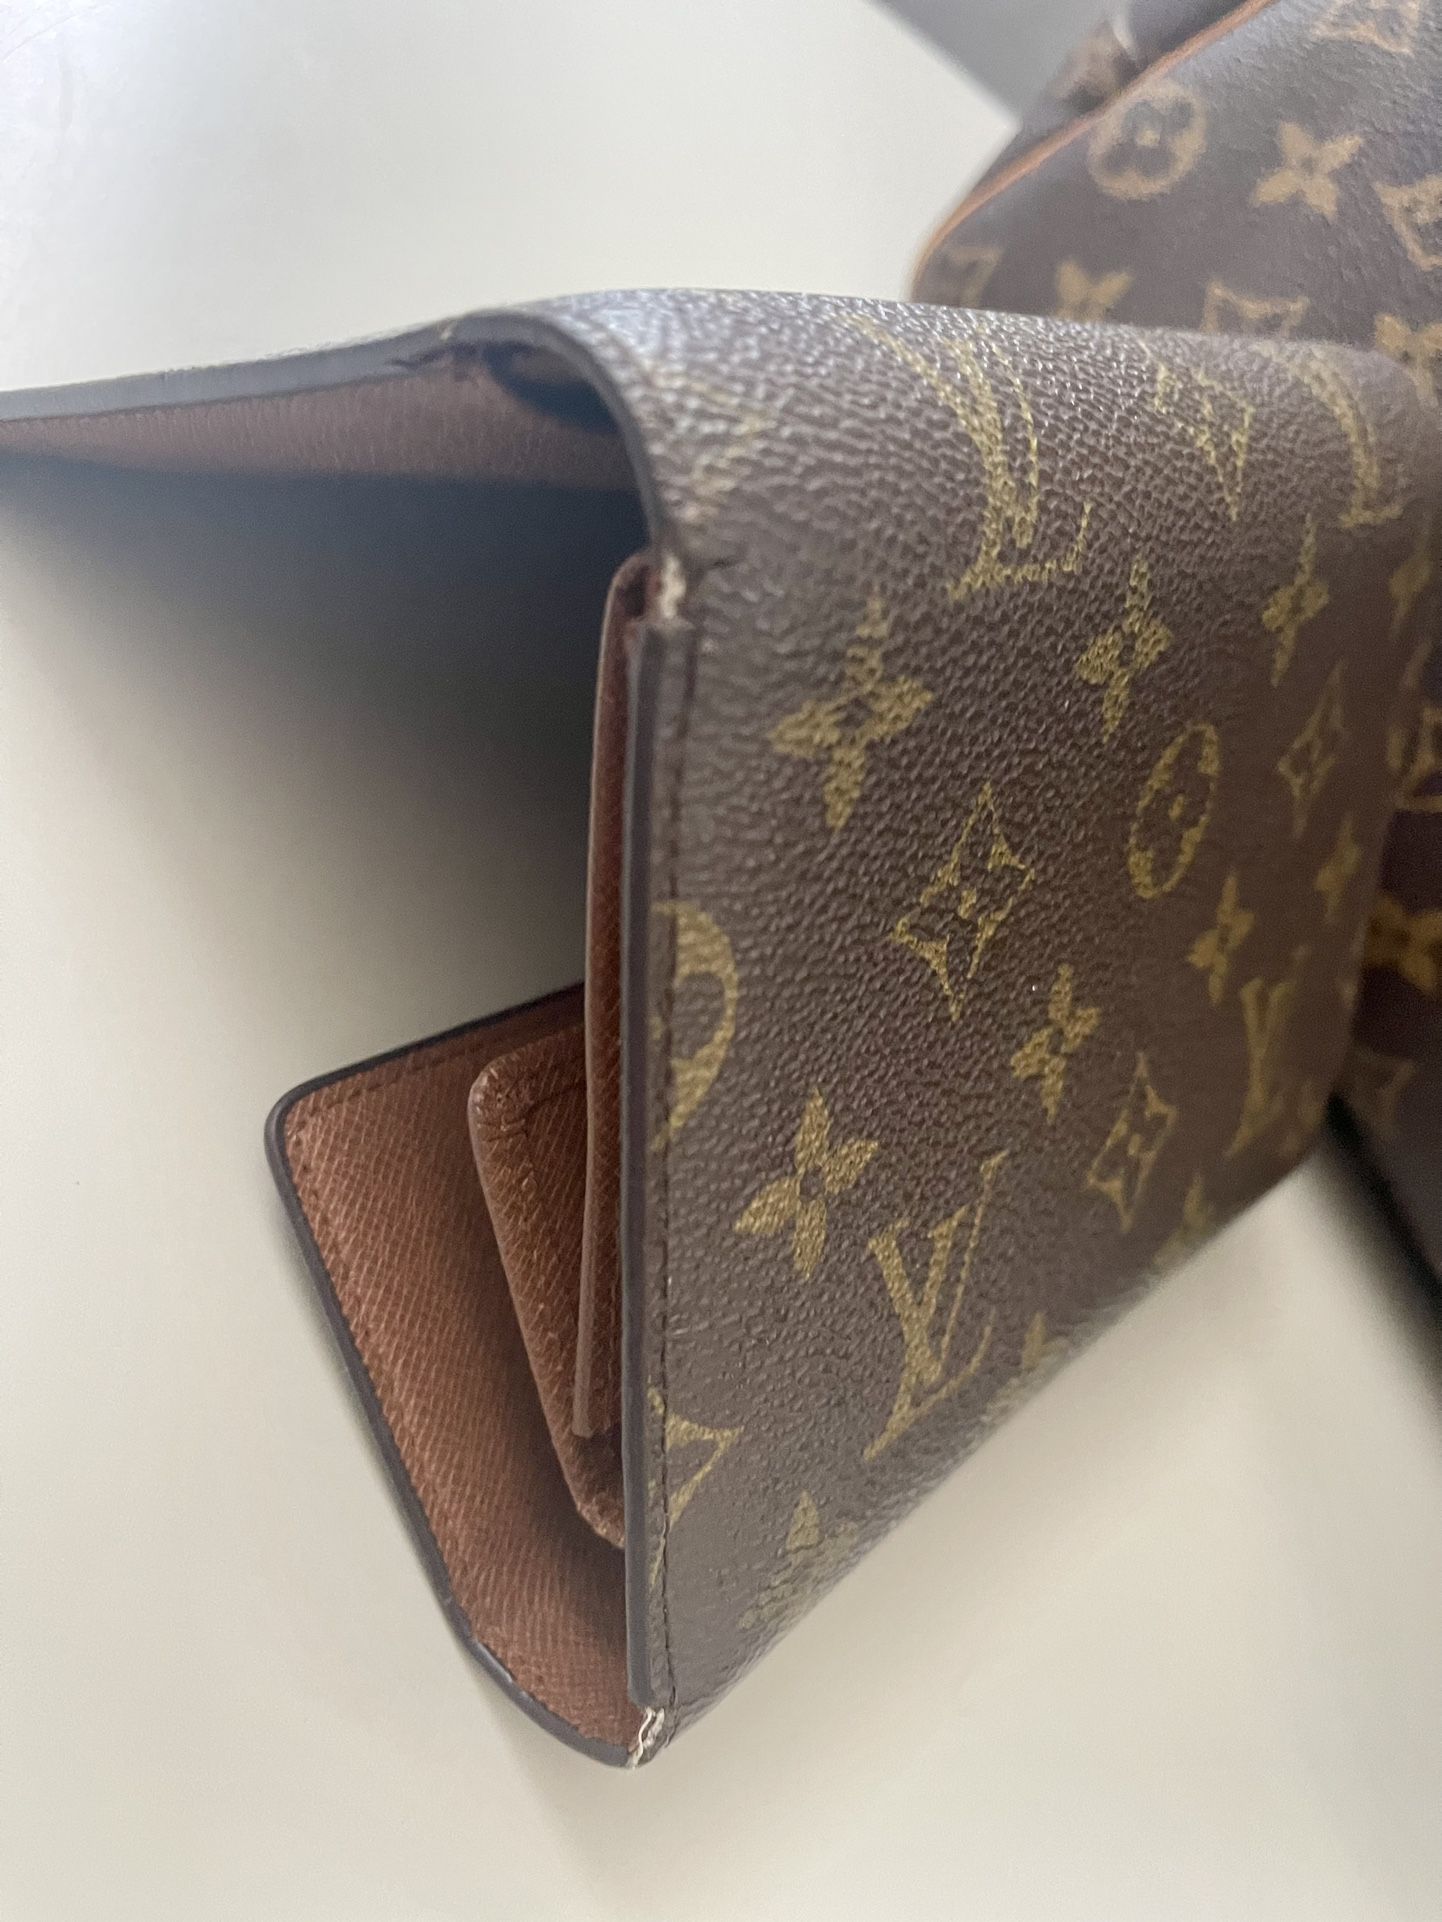 Authentic Louis Vuitton Handbag for Sale in Anaheim, CA - OfferUp